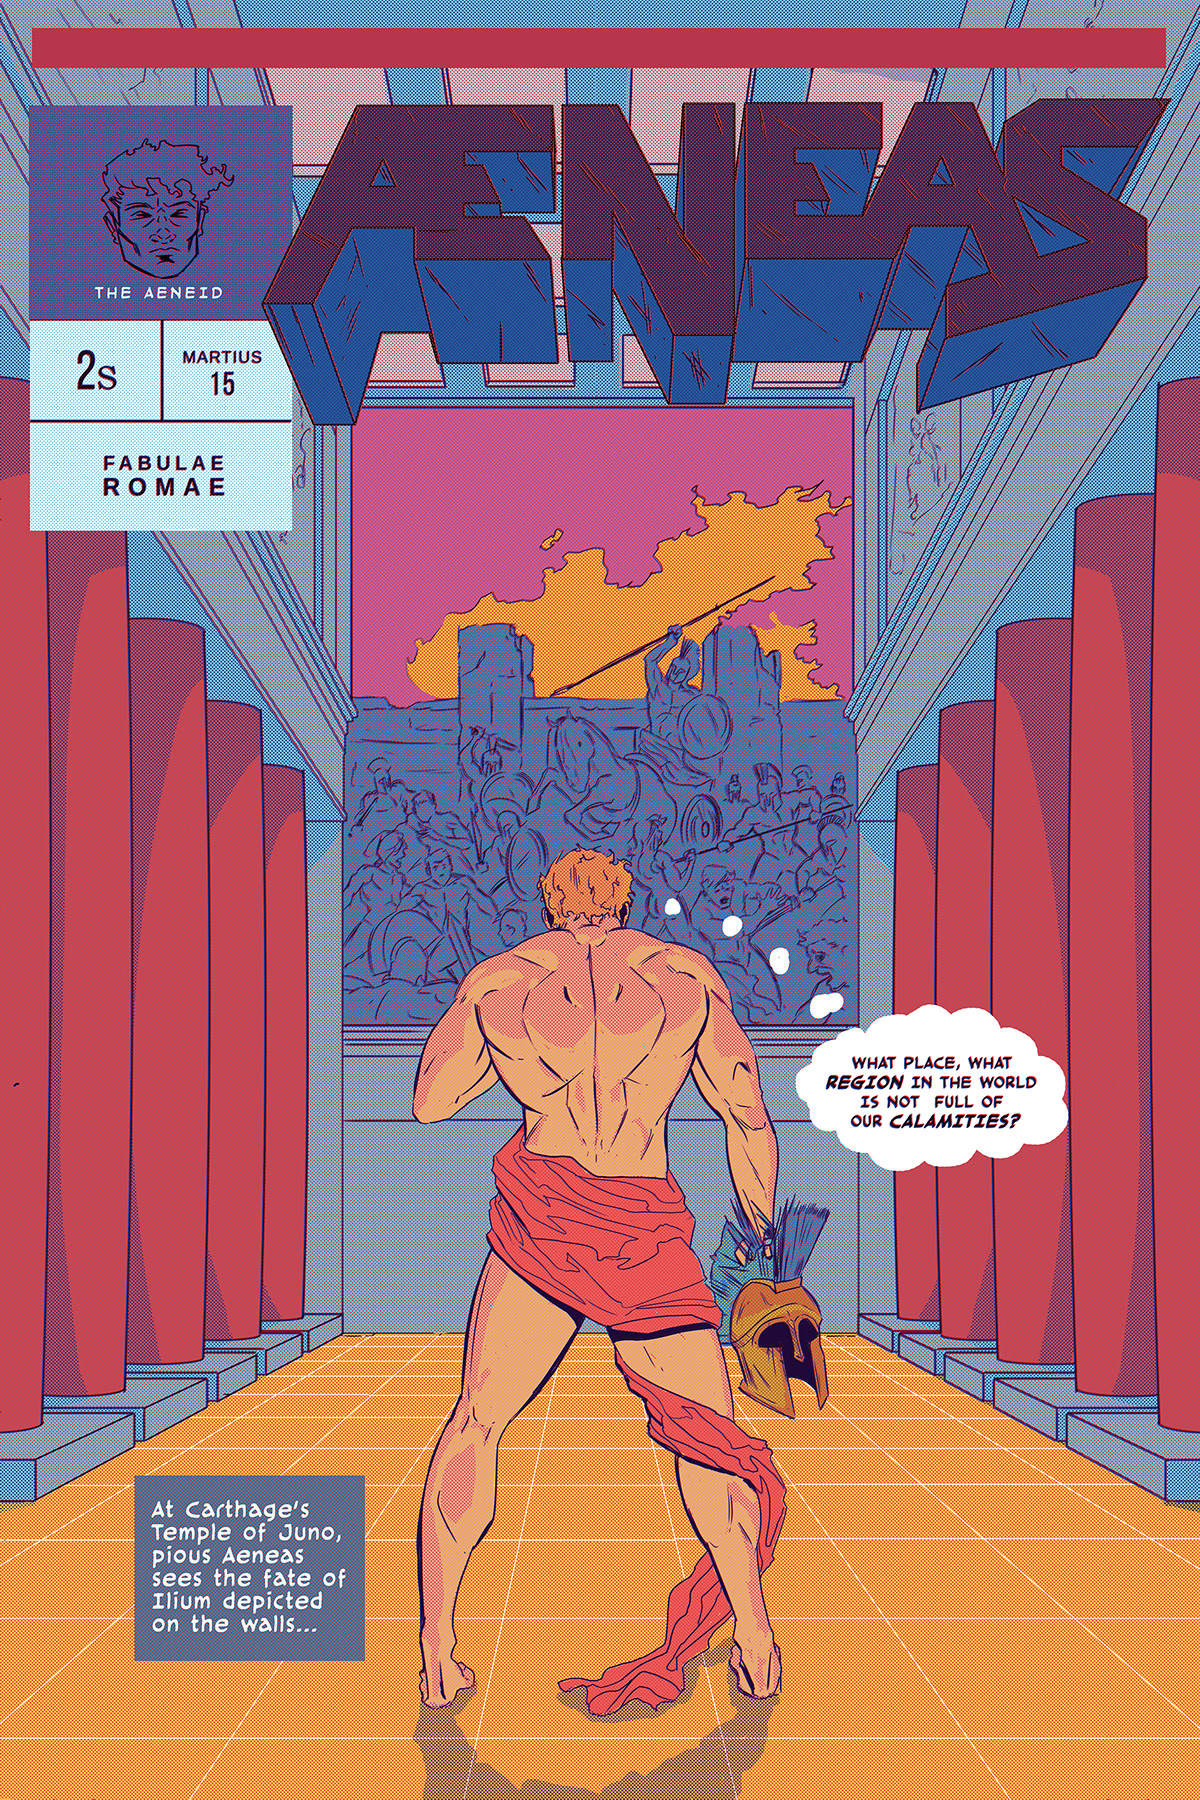 comic covers greek mythology roman odyssey aeneid Rome Greece silver age